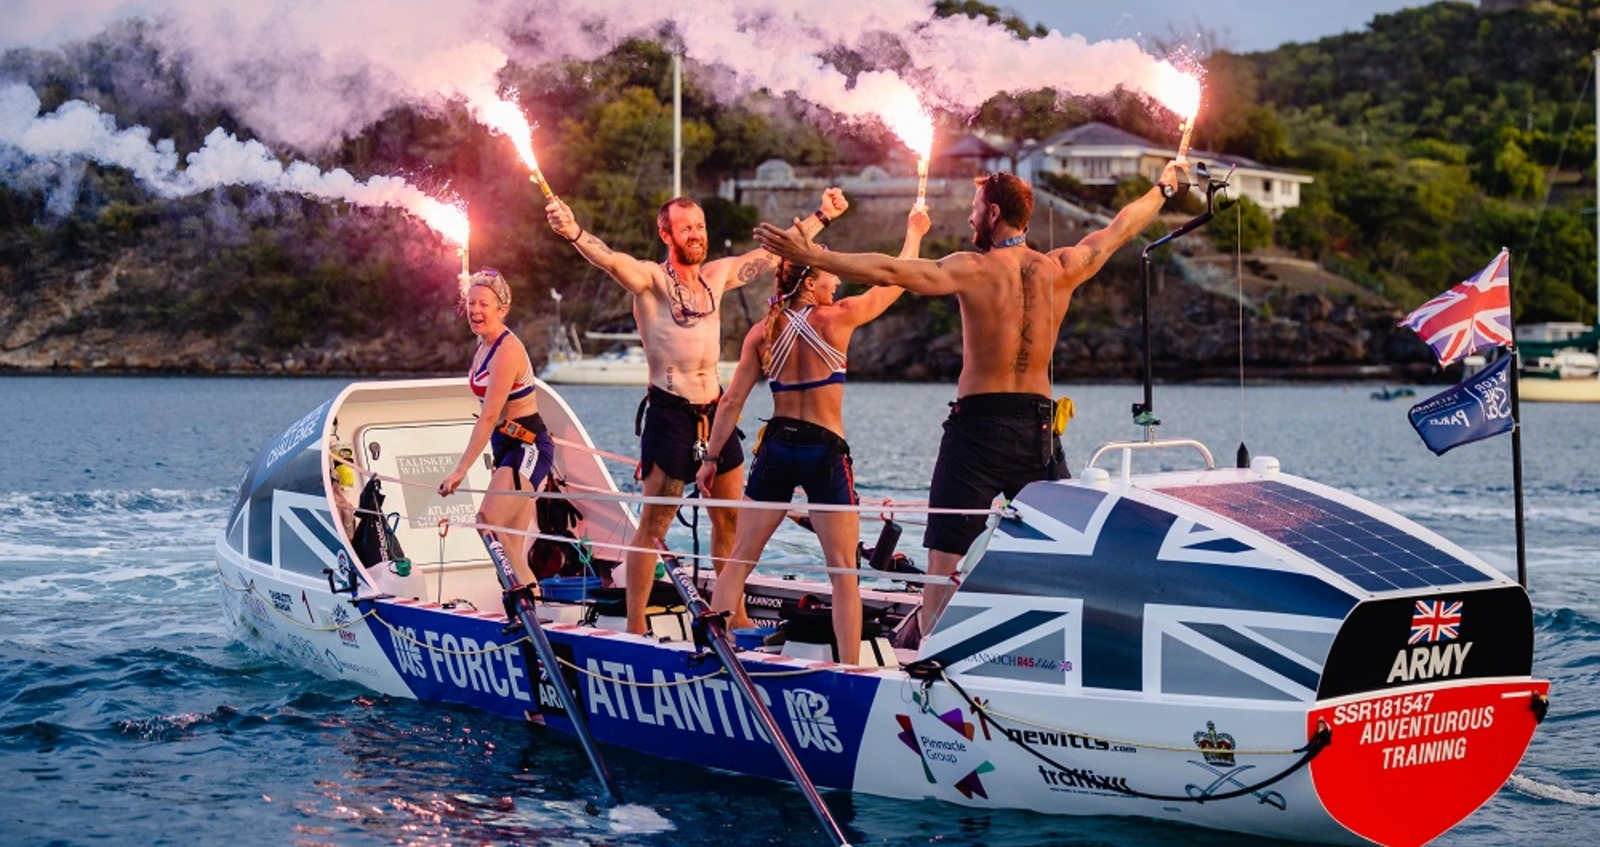 Force Atlantic team light flares to celebrate completing challenge